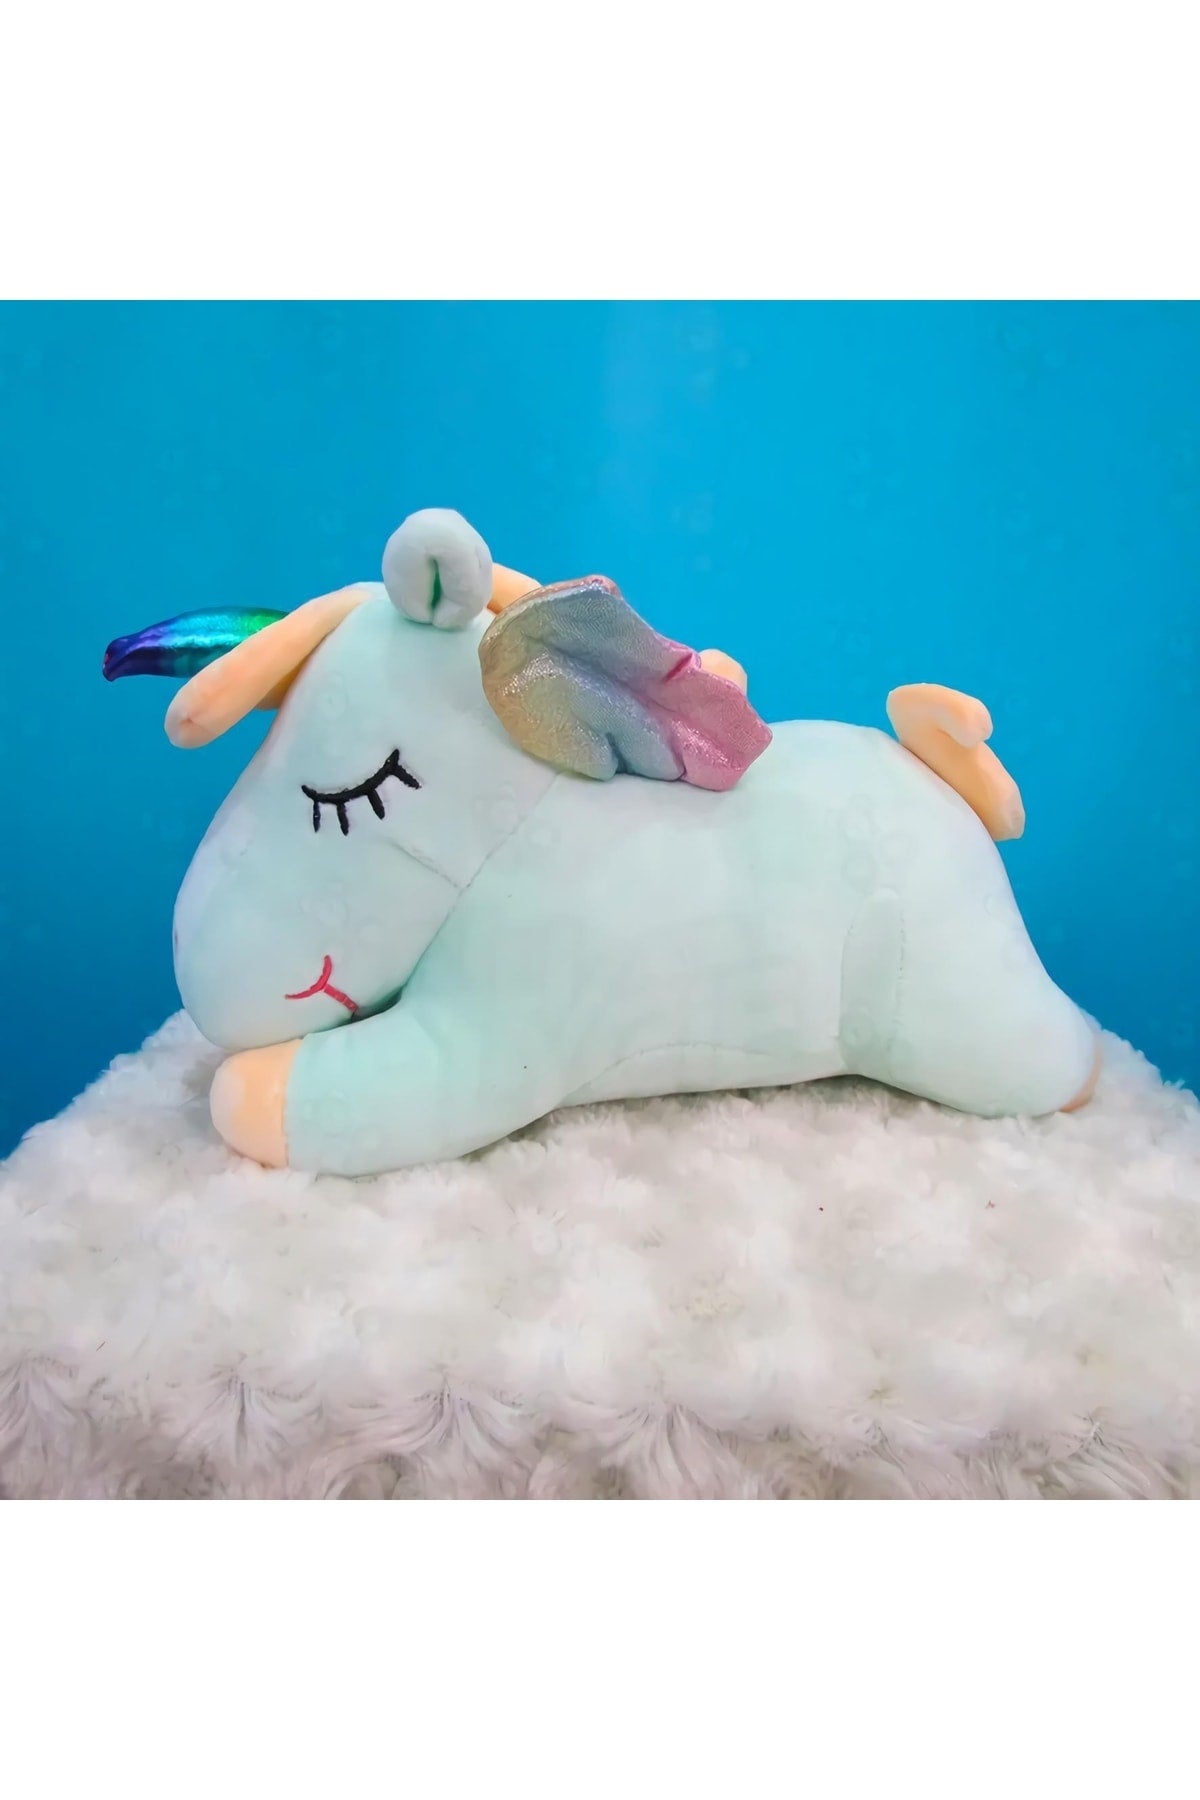 Imported Fabric Cute Star Wings Horned Unicorn Figure Plush Toy Play & Sleep Companion 28 Cm.